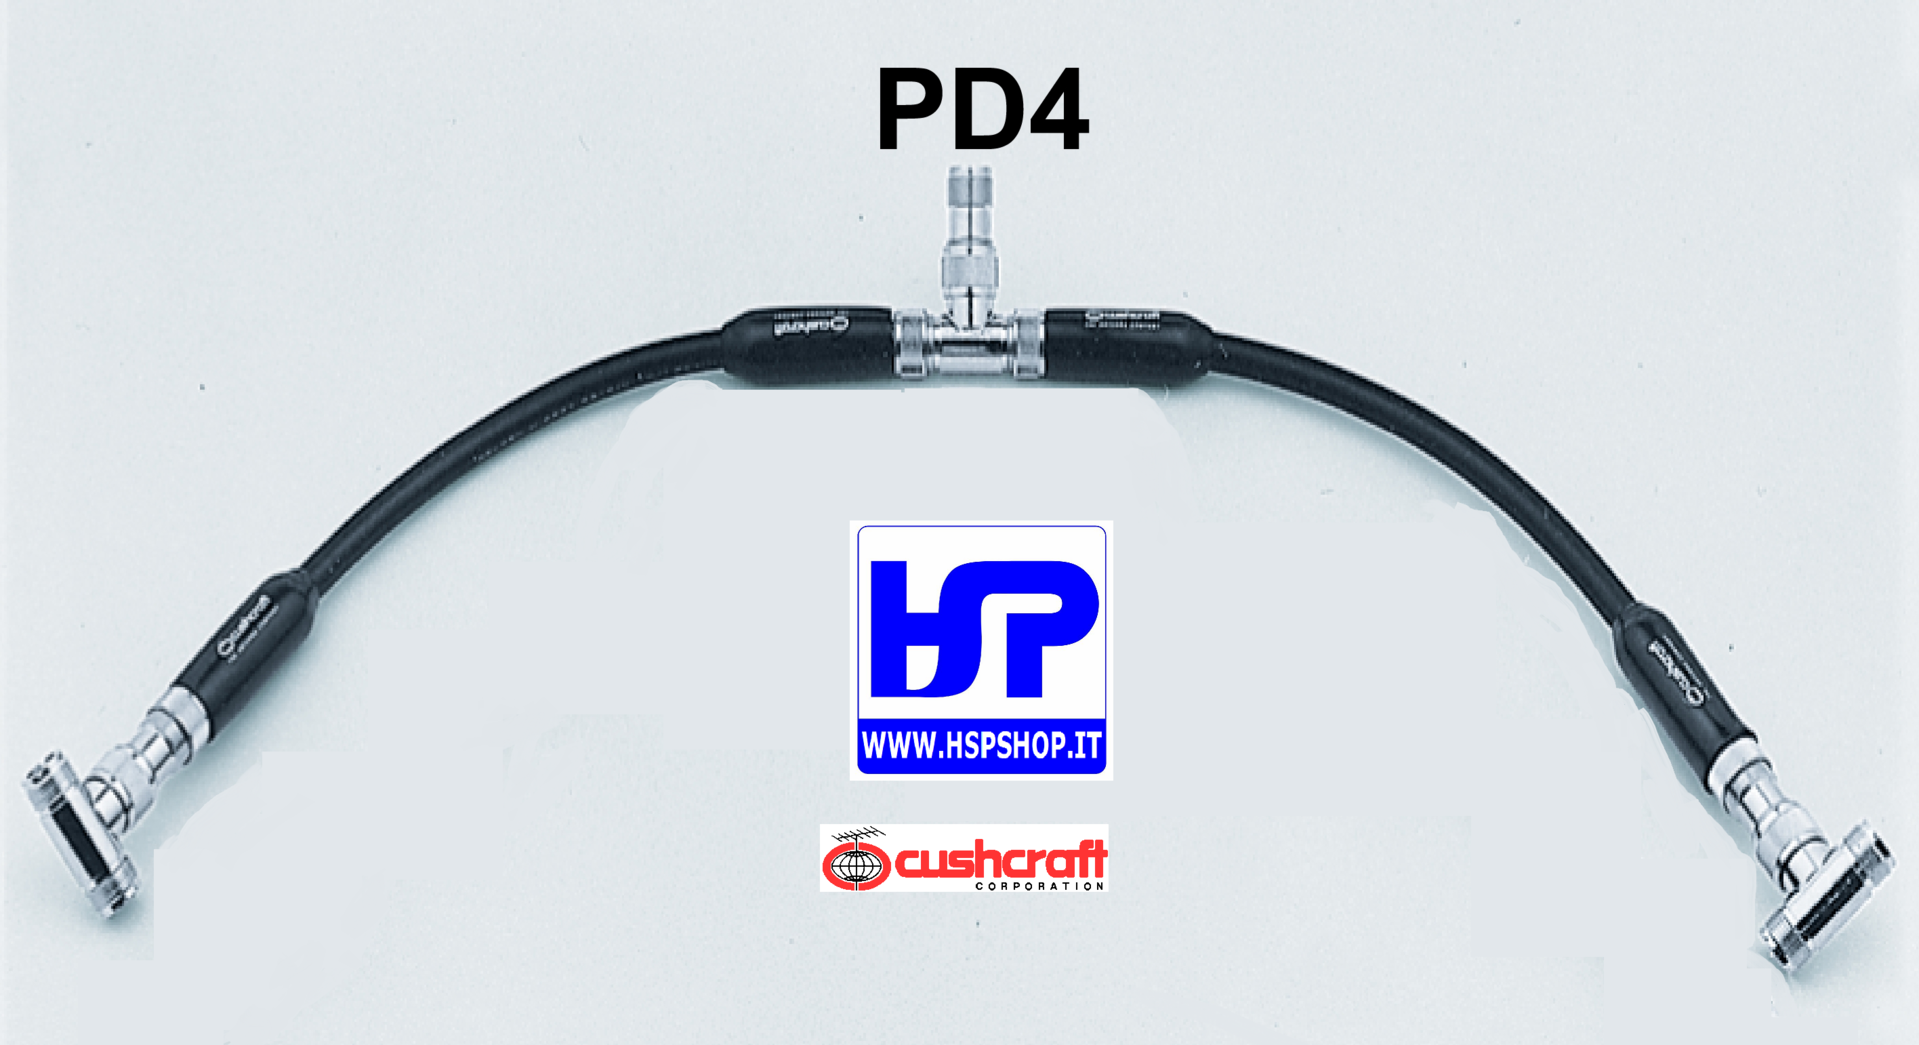 CUSHCRAFT - PD-4 - 2 M. 4 PORT POWER DIVIDER